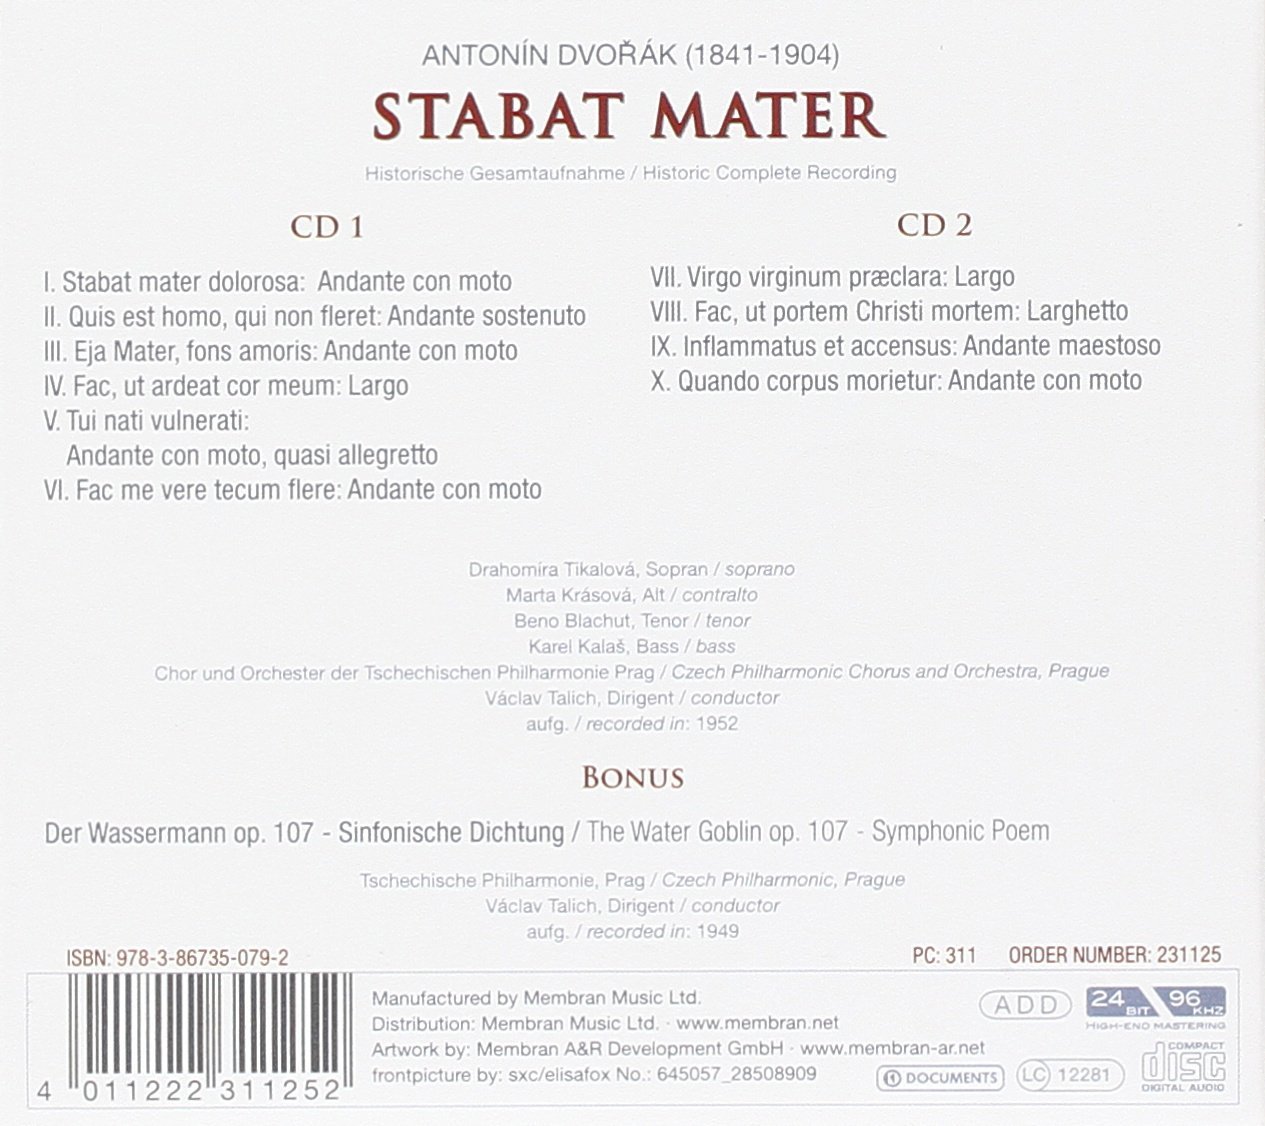 Stabat Mater | Antonin Dvorak image1